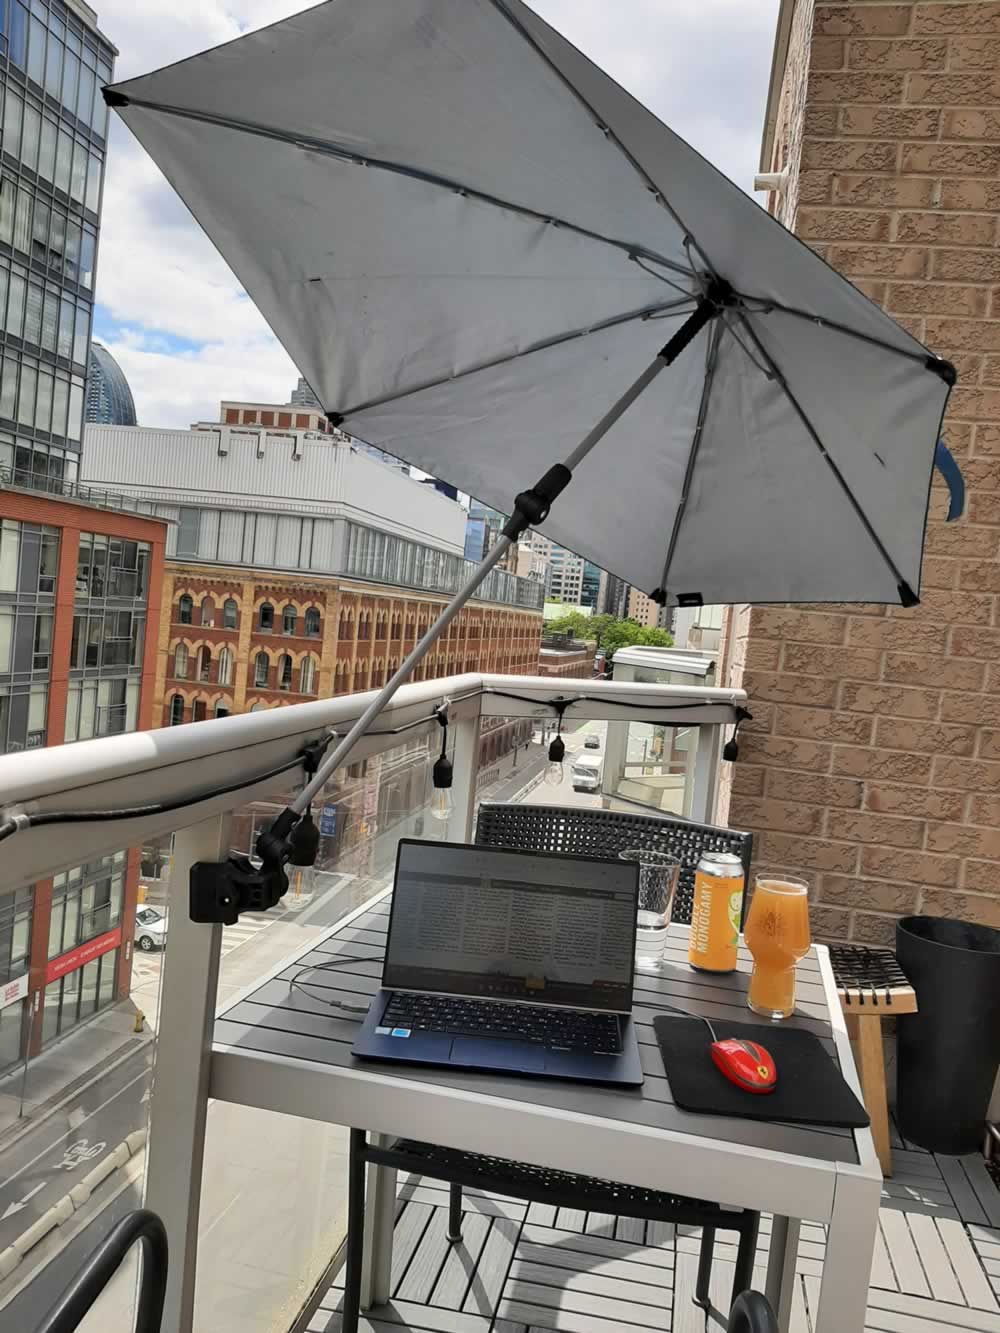 Umbrella on balcony providing shade for working on laptop.